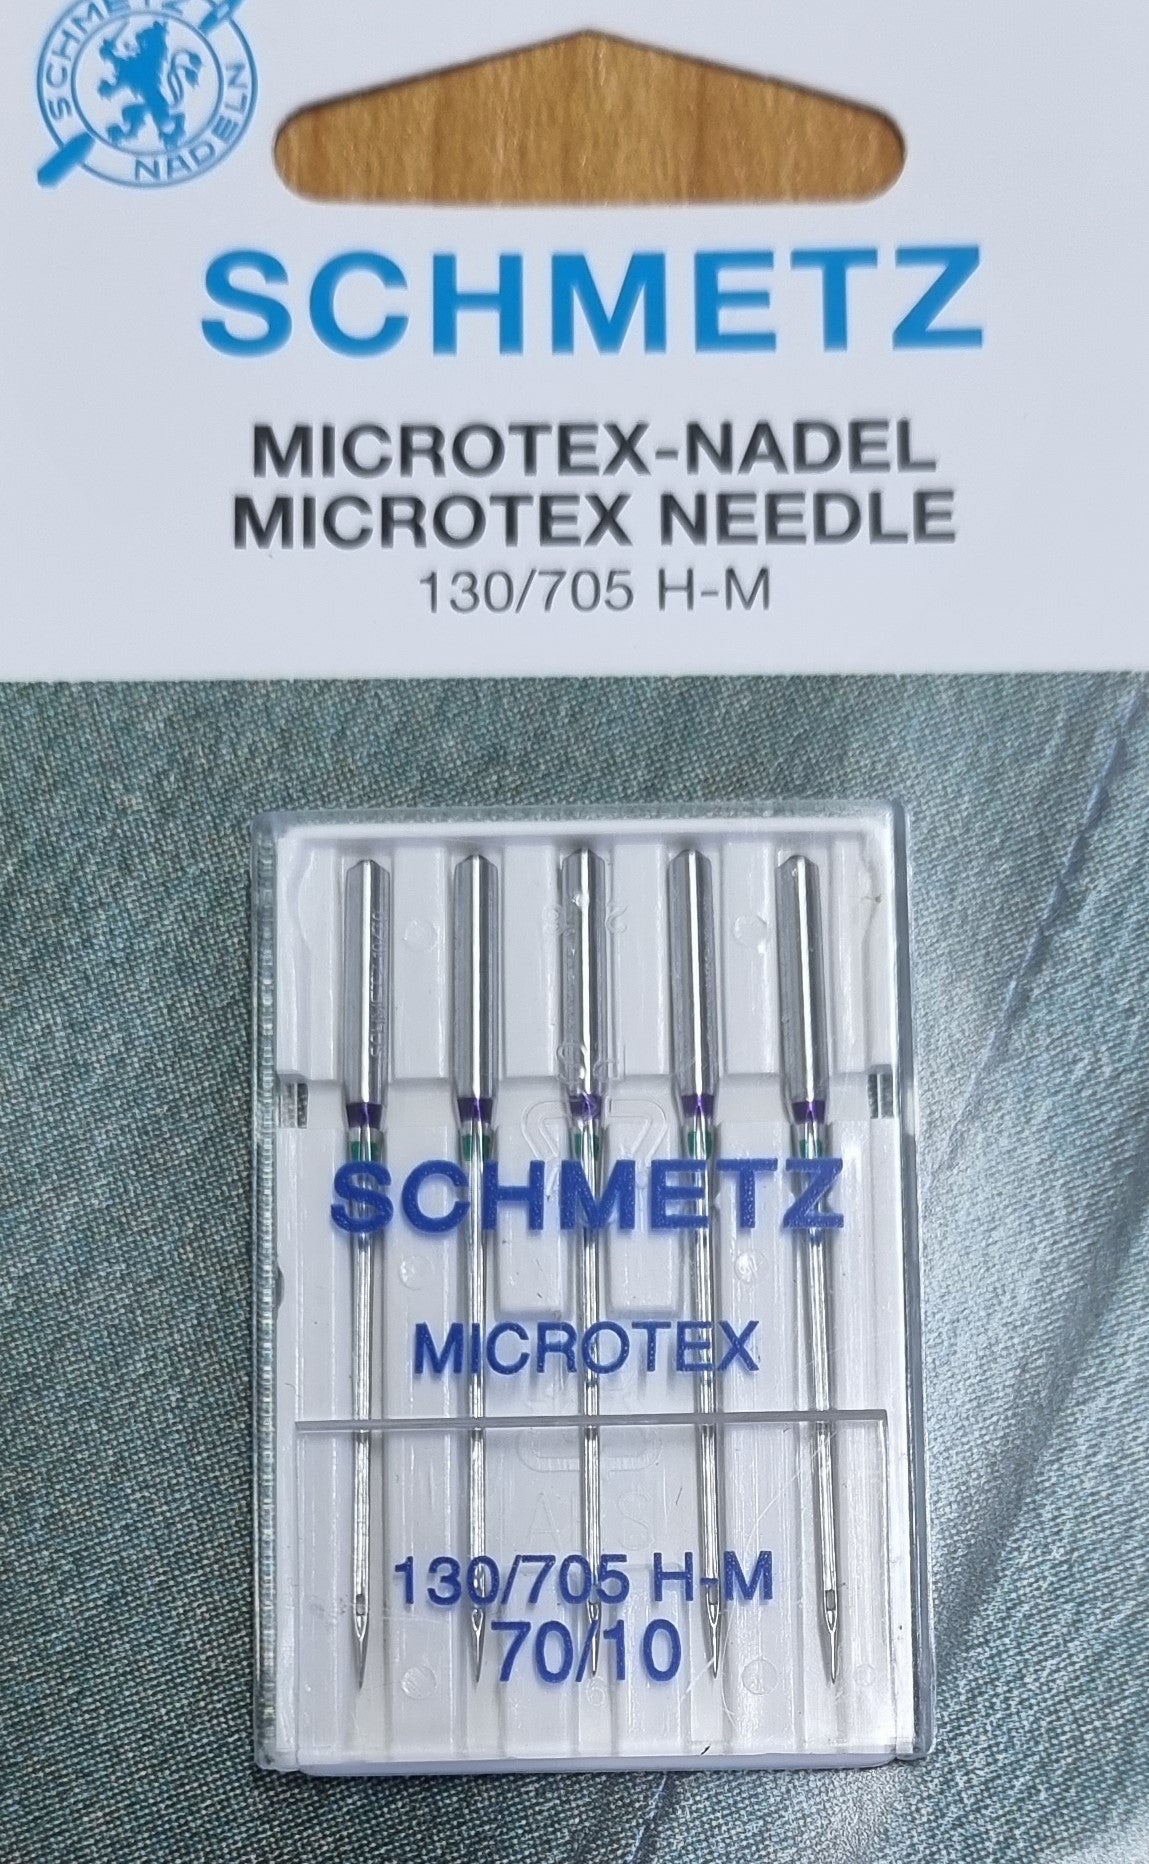 Sharp/Microtex sewing machine needles -Schmetz 70/12